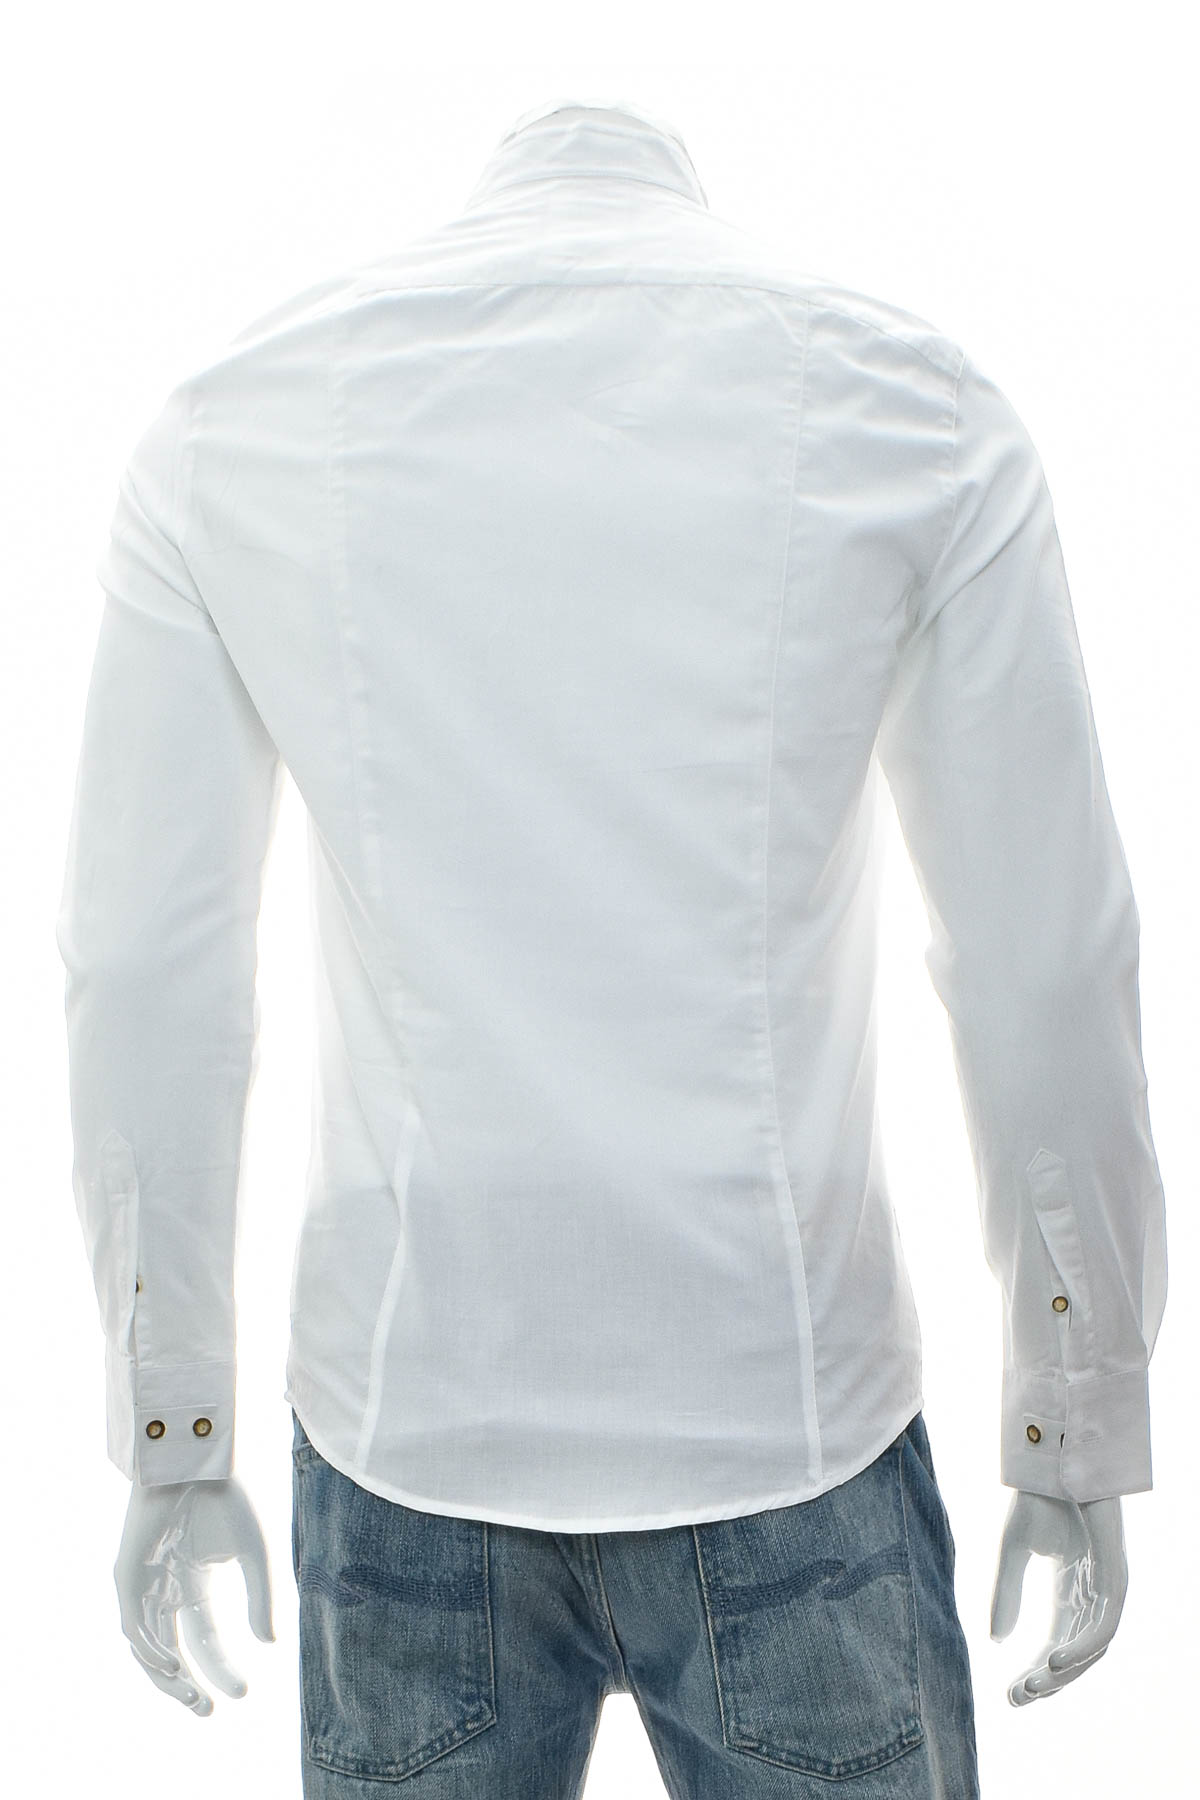 Men's shirt - CocoVero - 1